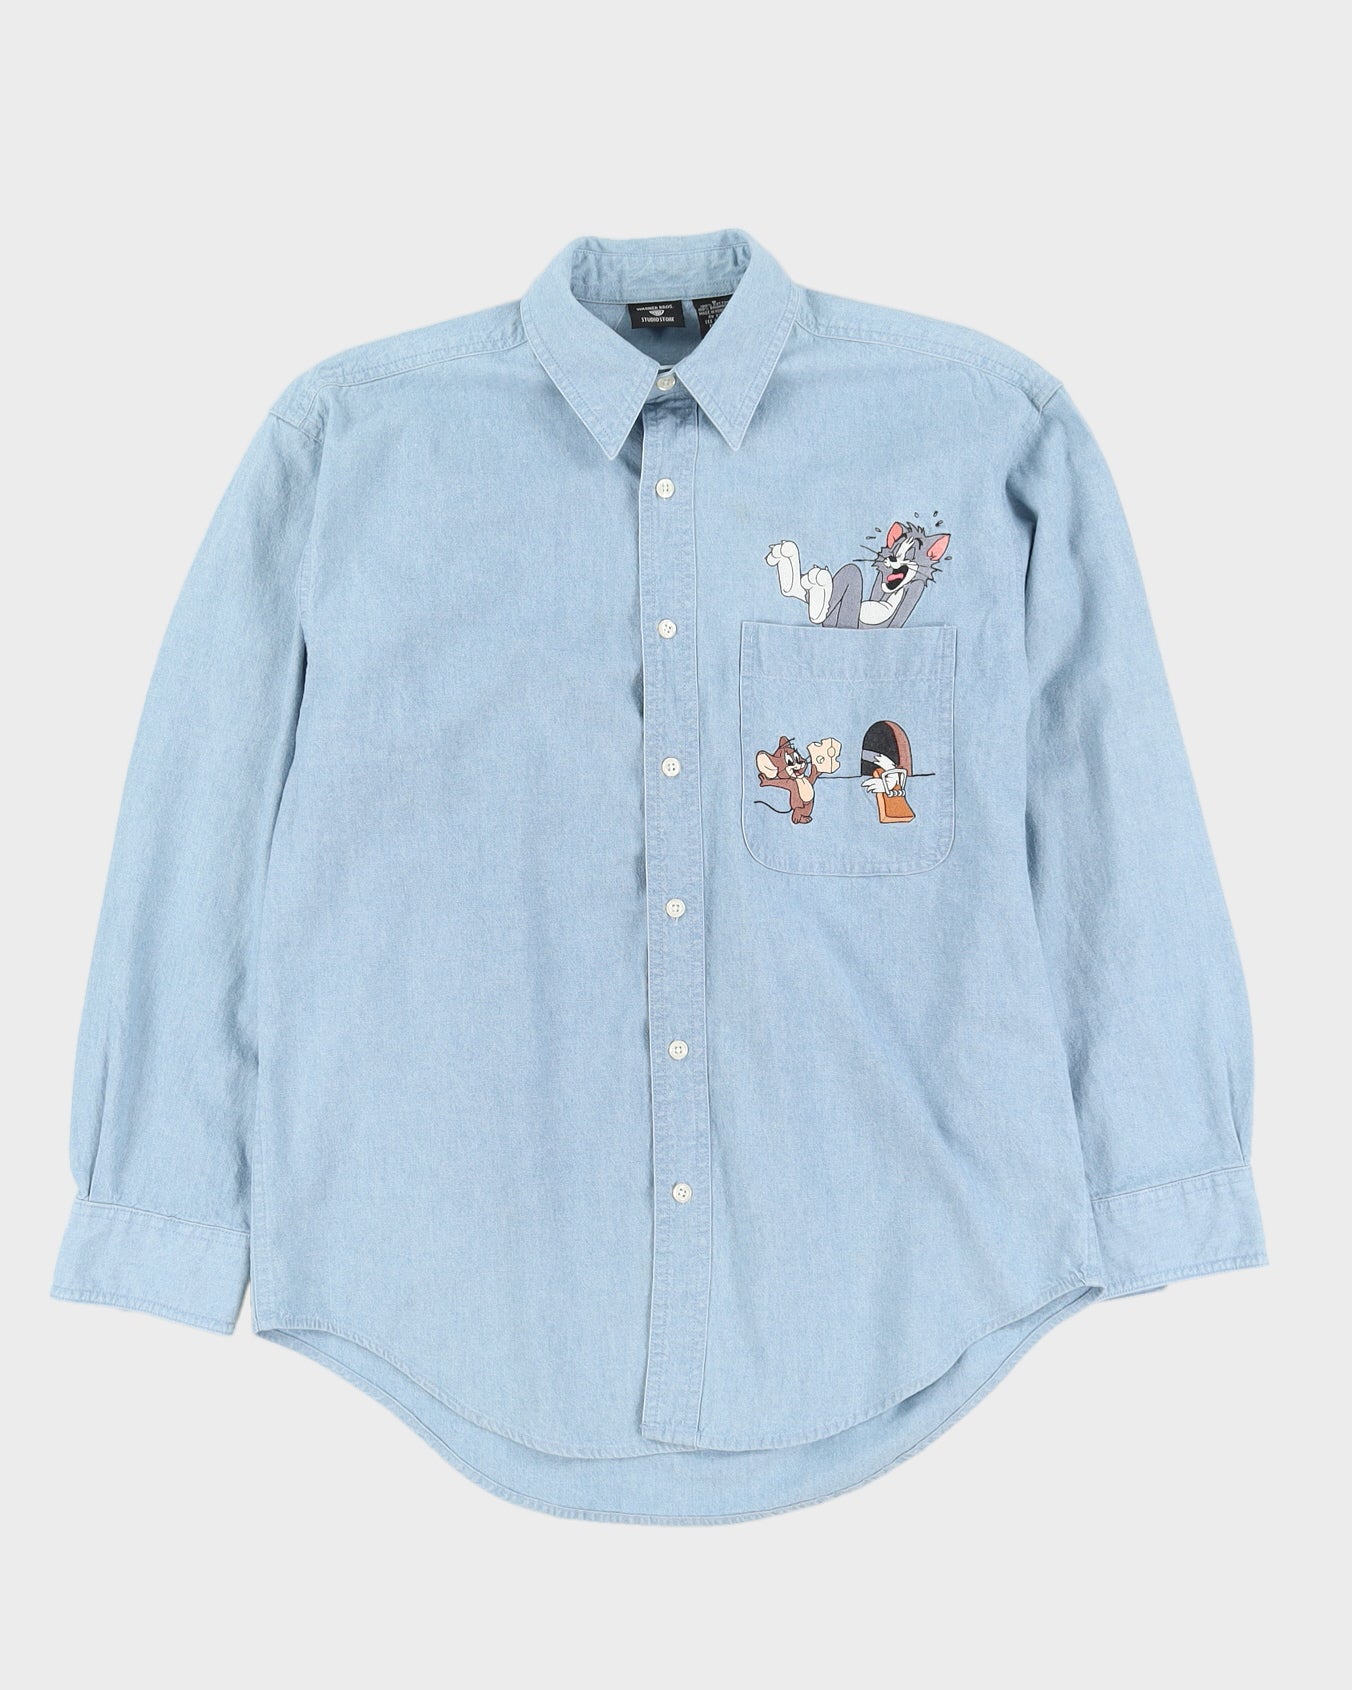 00s Warner Bros Blue Embroidered Tom & Jerry Blue Denim Shirt - S